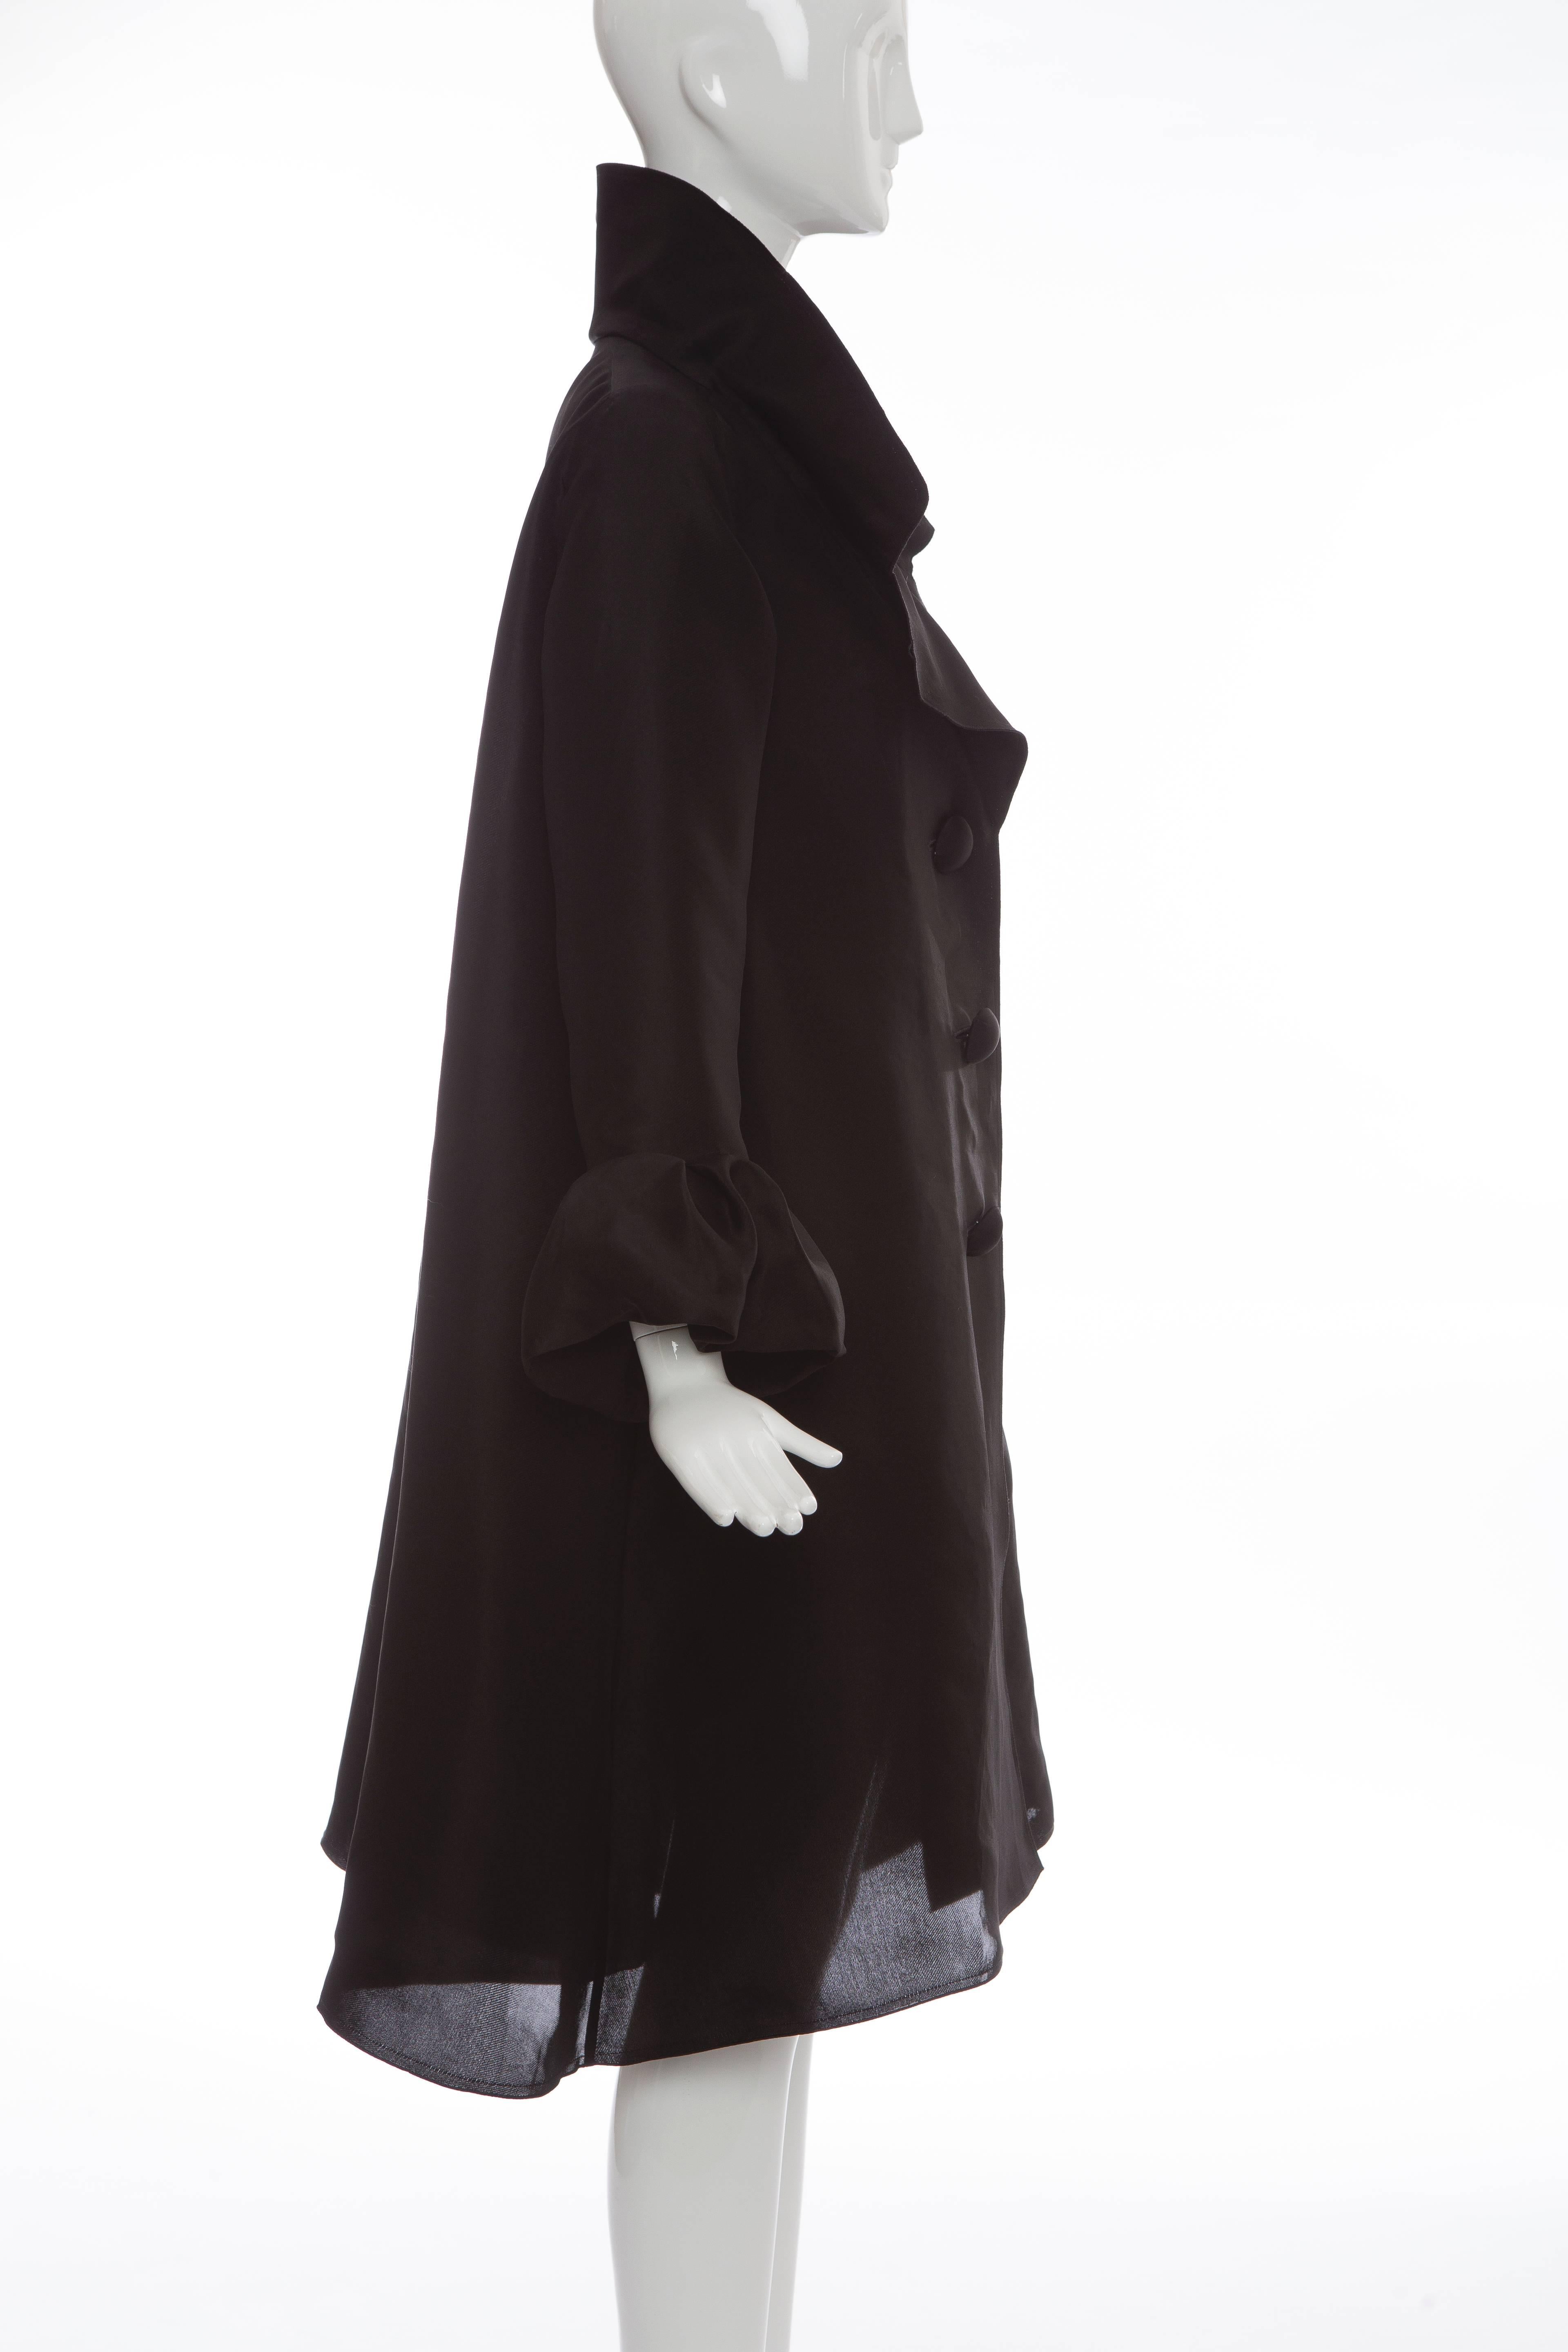    Alber Elbaz for Lanvin Black Silk Lightweight Evening Coat, Fall 2006 In Excellent Condition For Sale In Cincinnati, OH